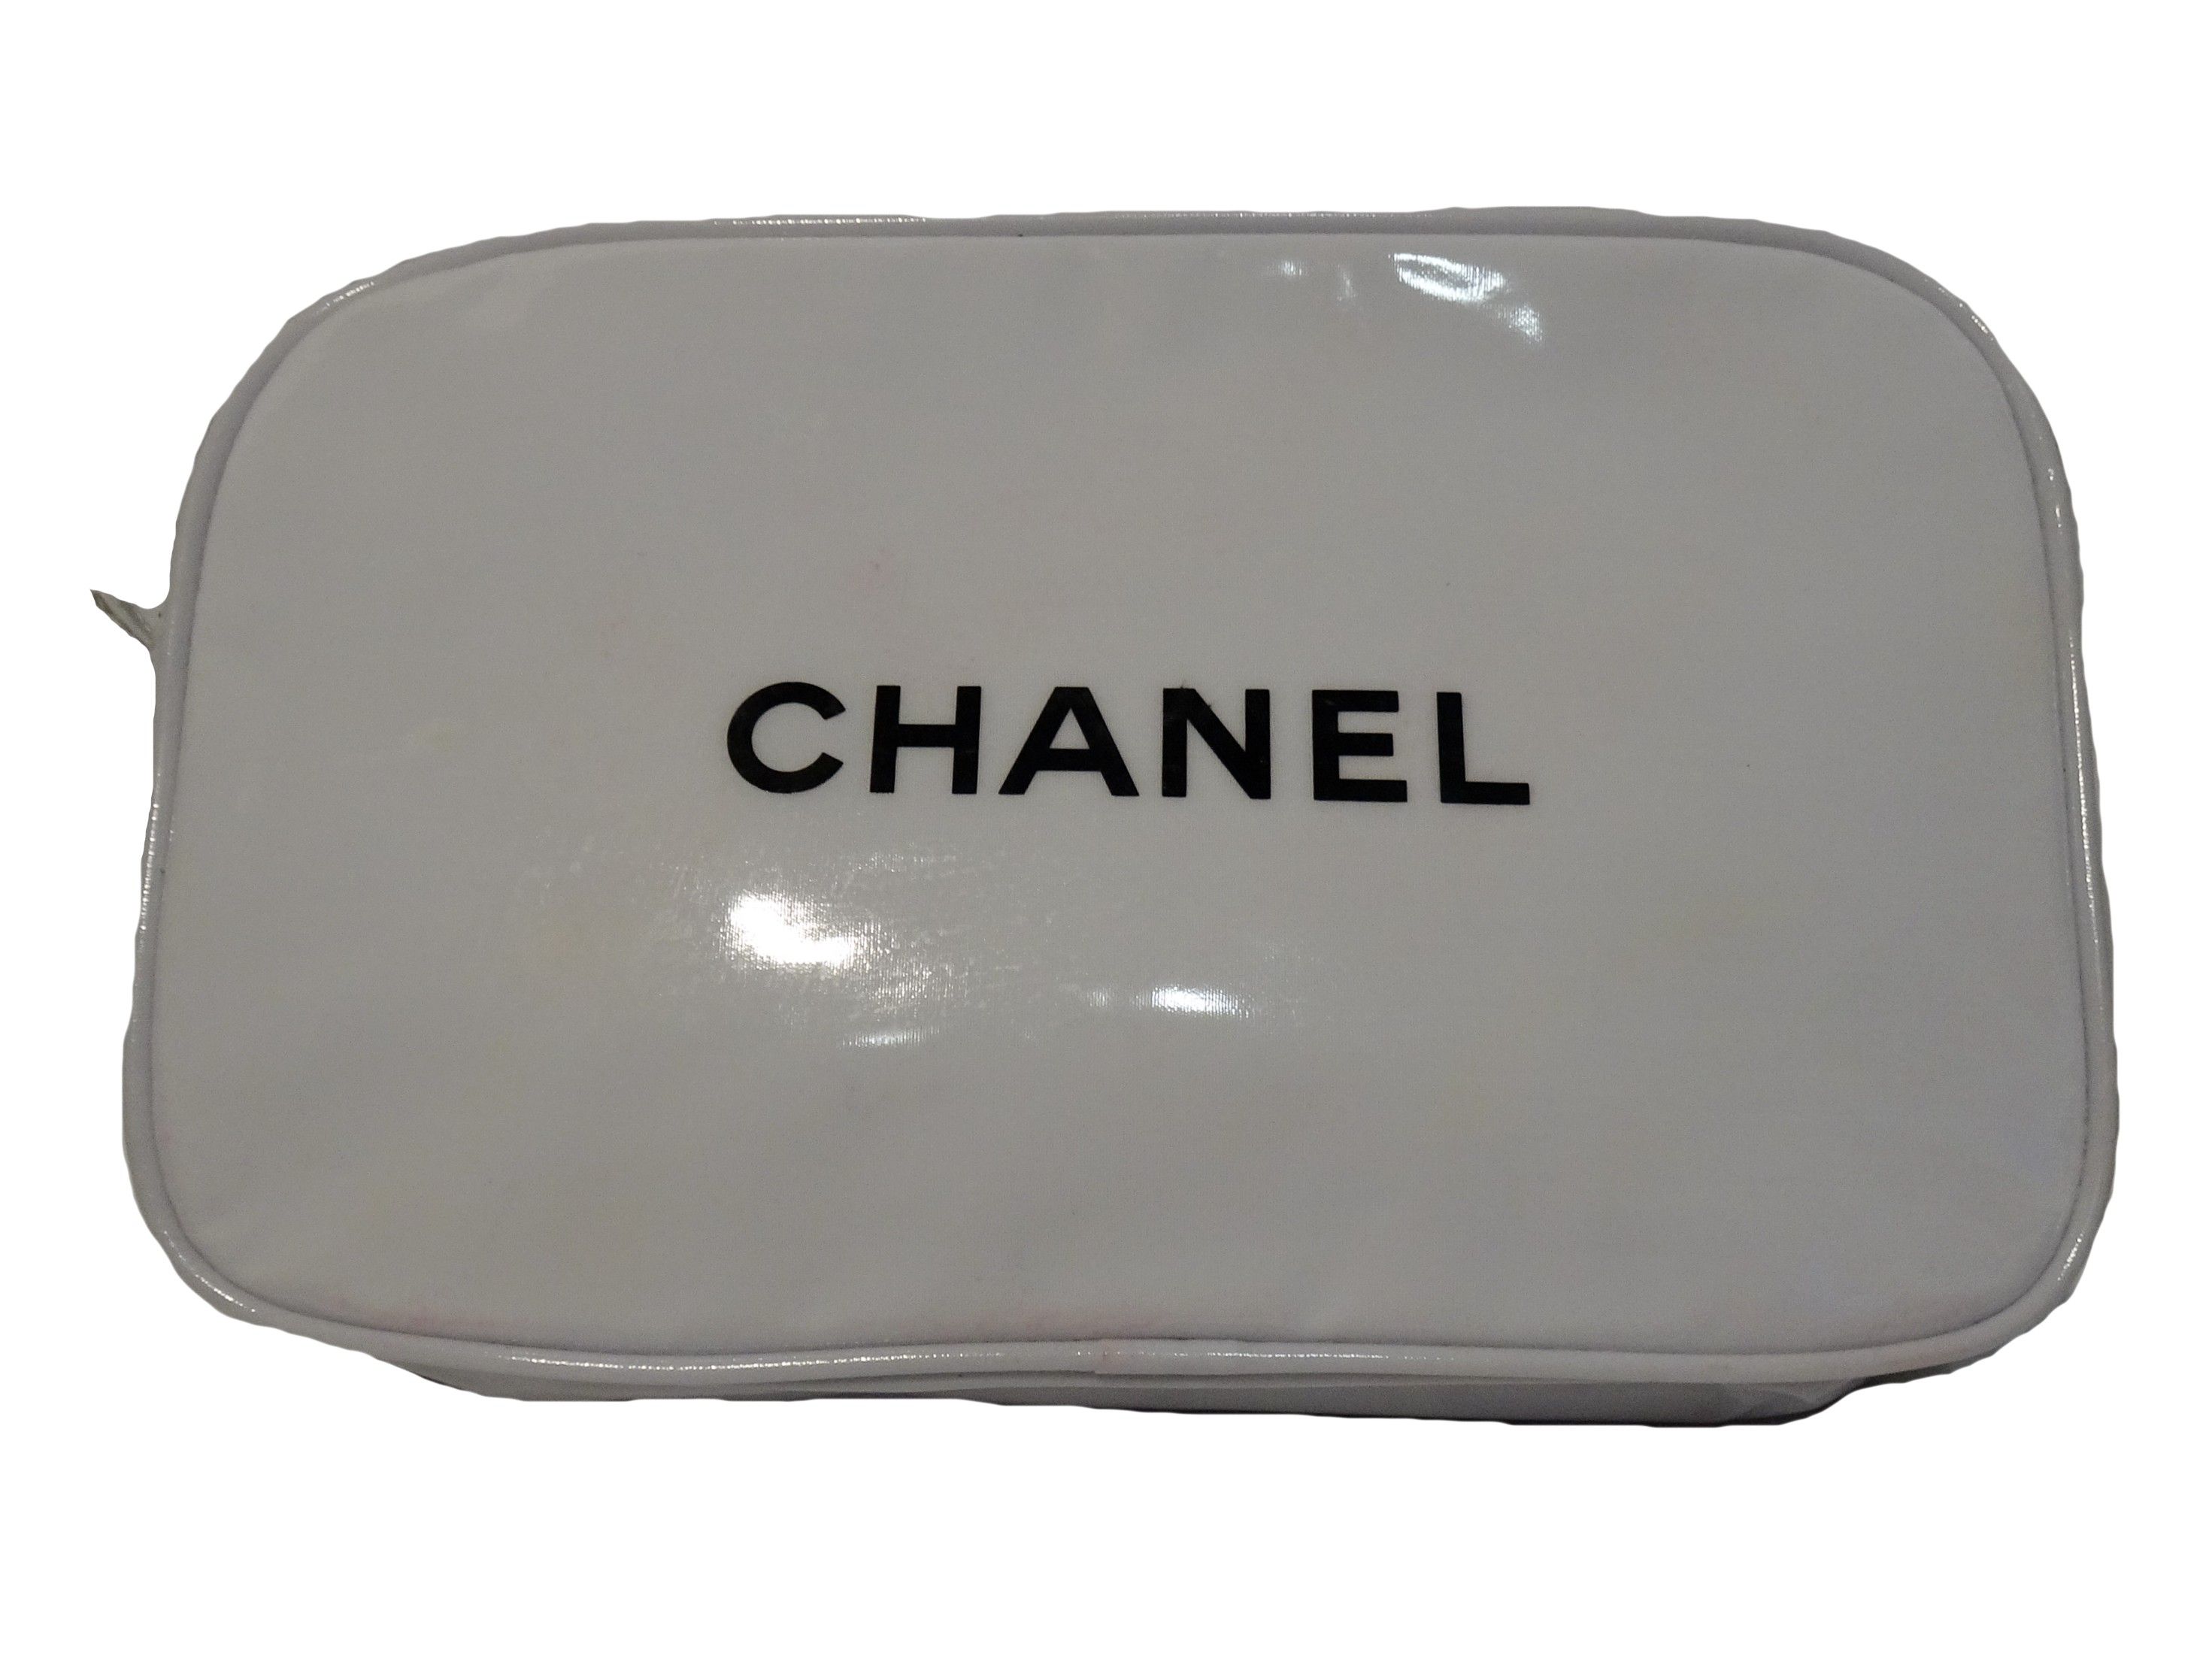 Chanel CHANEL COSMETIC MAKEUP BAG